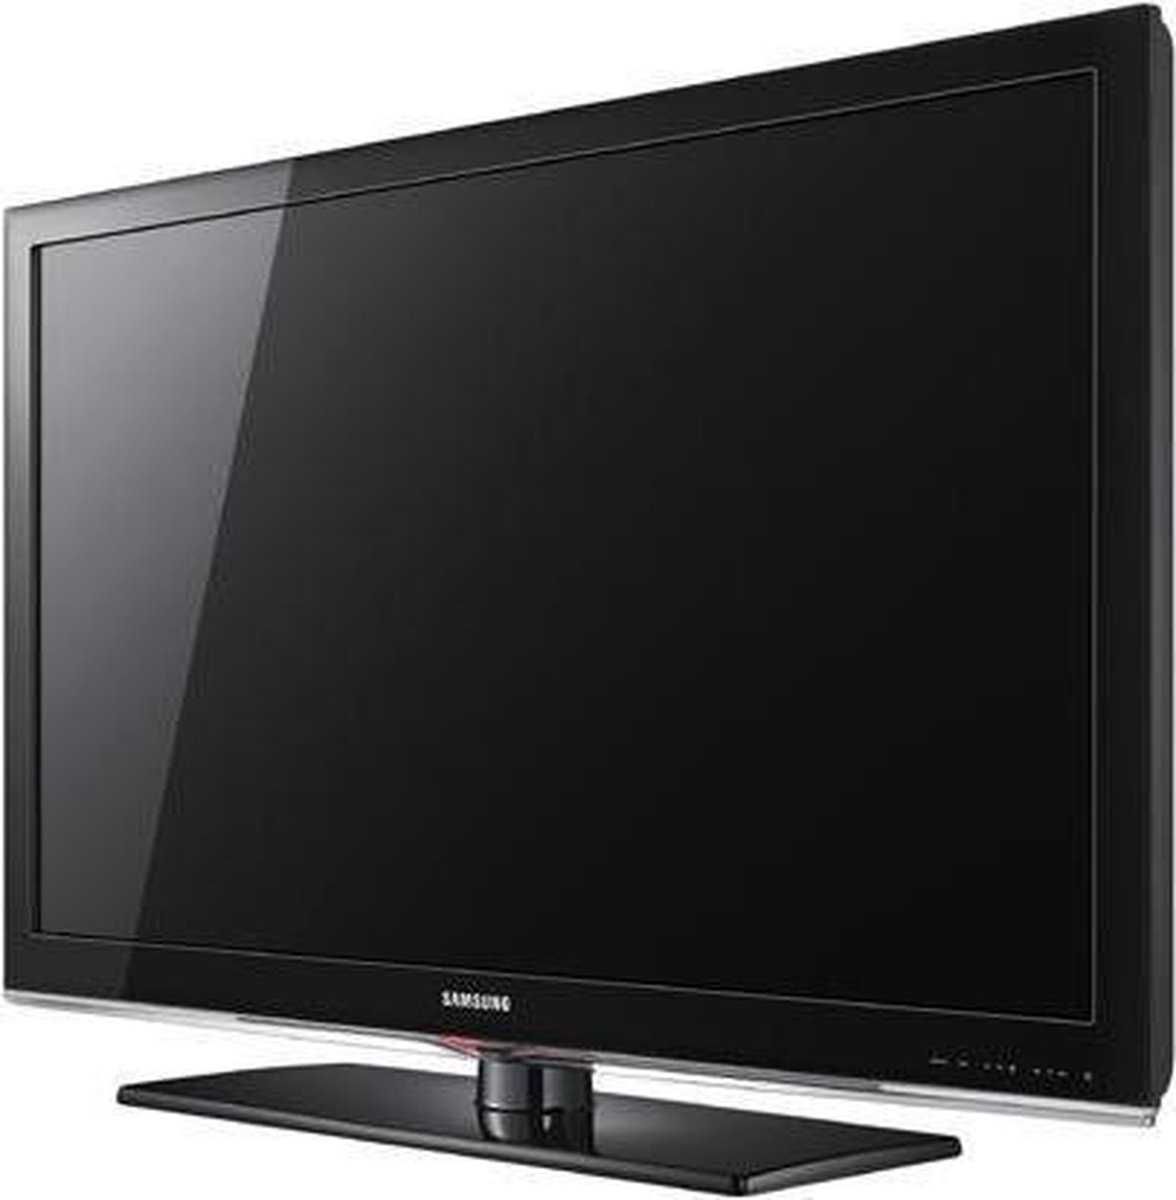 Pachet: TV Samsung LE32C530F1W + Suport perete + ChromeCast